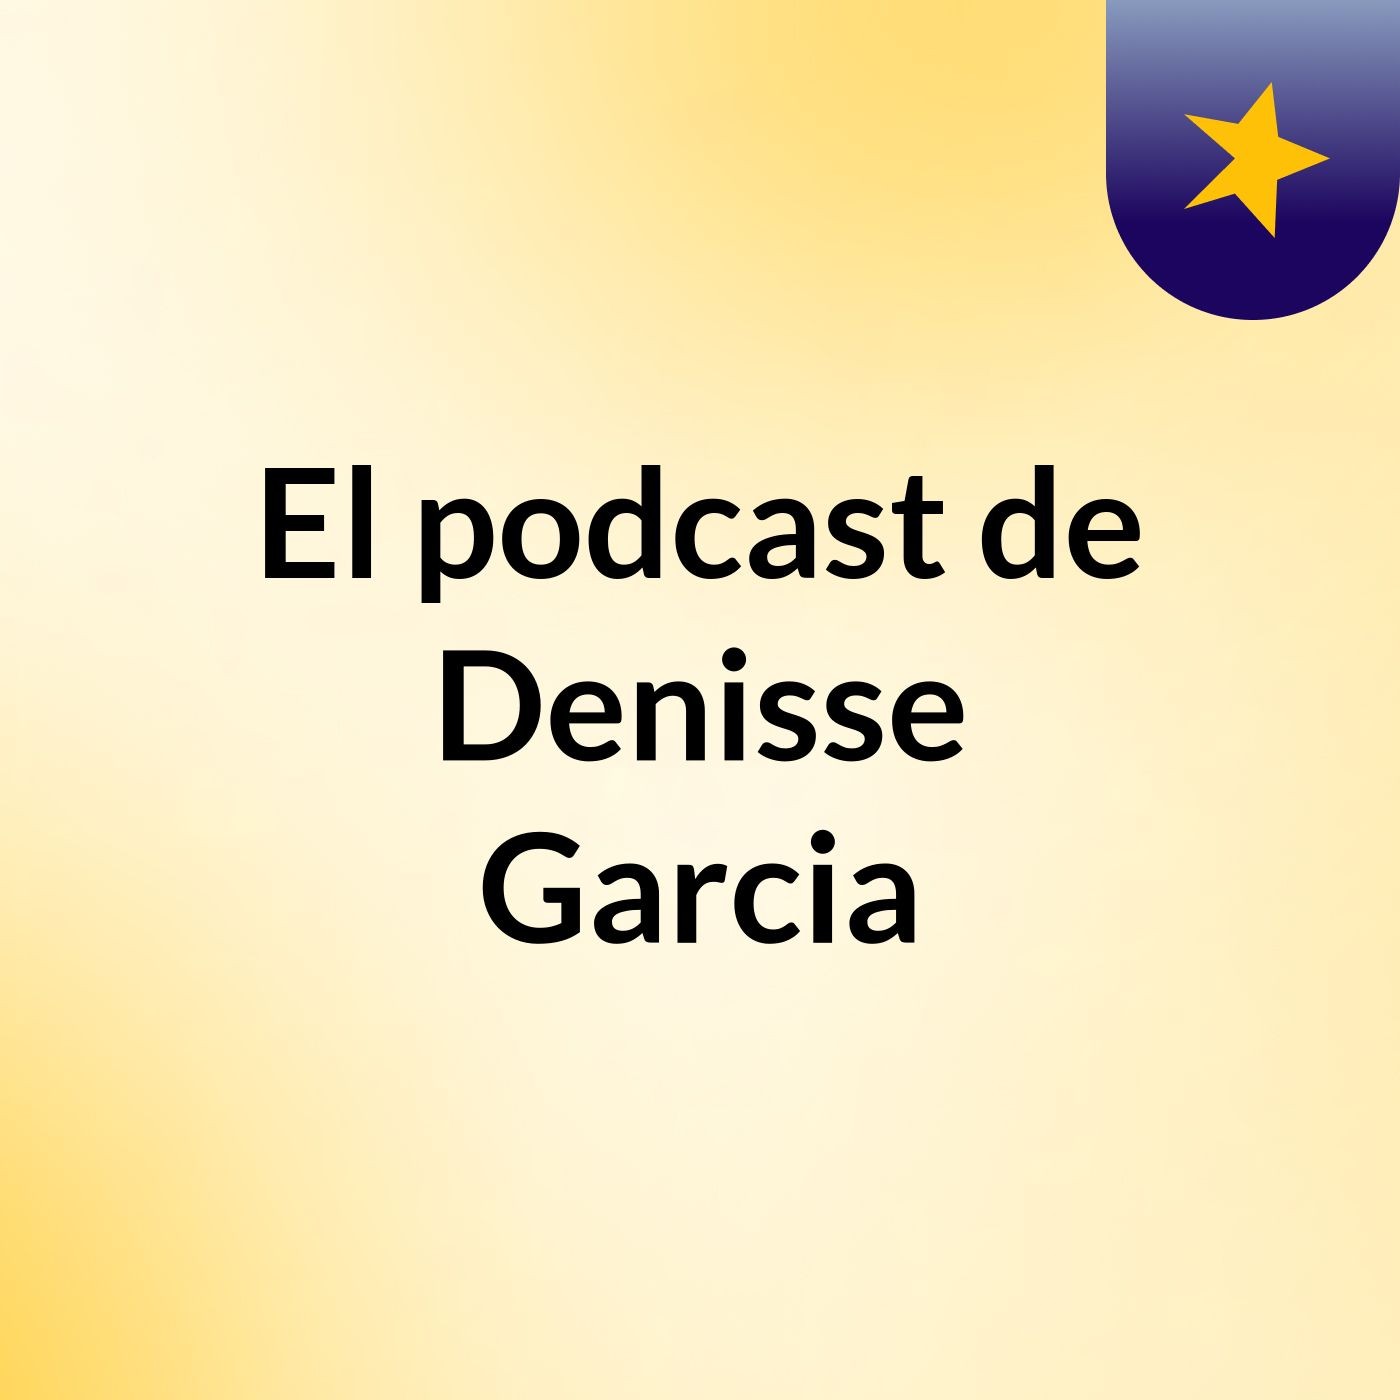 El podcast de Denisse Garcia